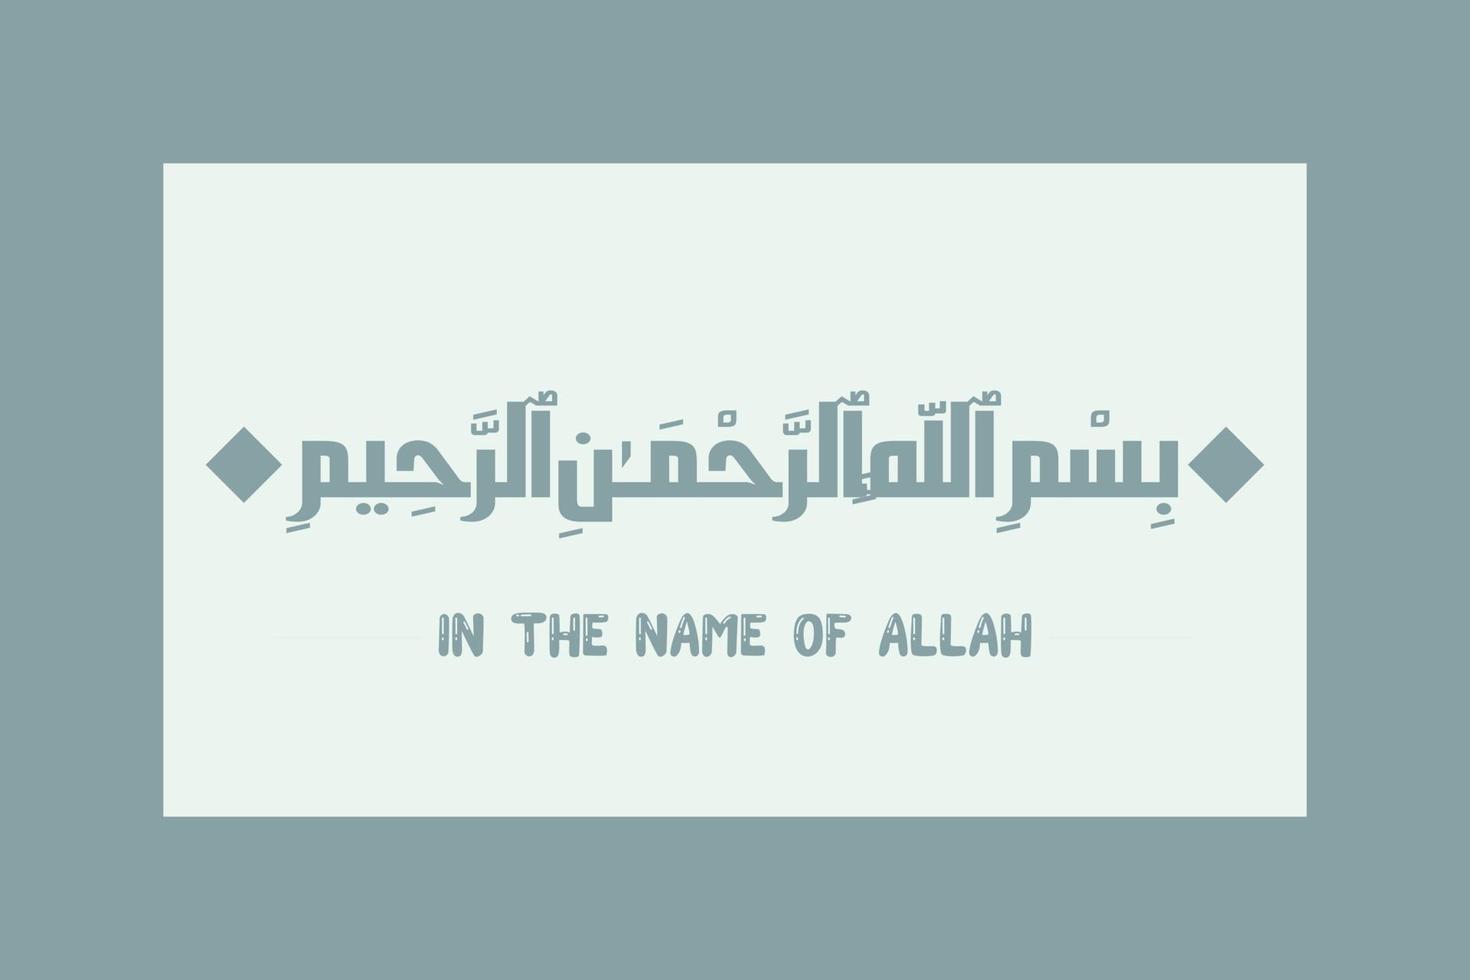 bismillah- em nome de letras árabes de alá, bismillahir rahmanir rahim vetor